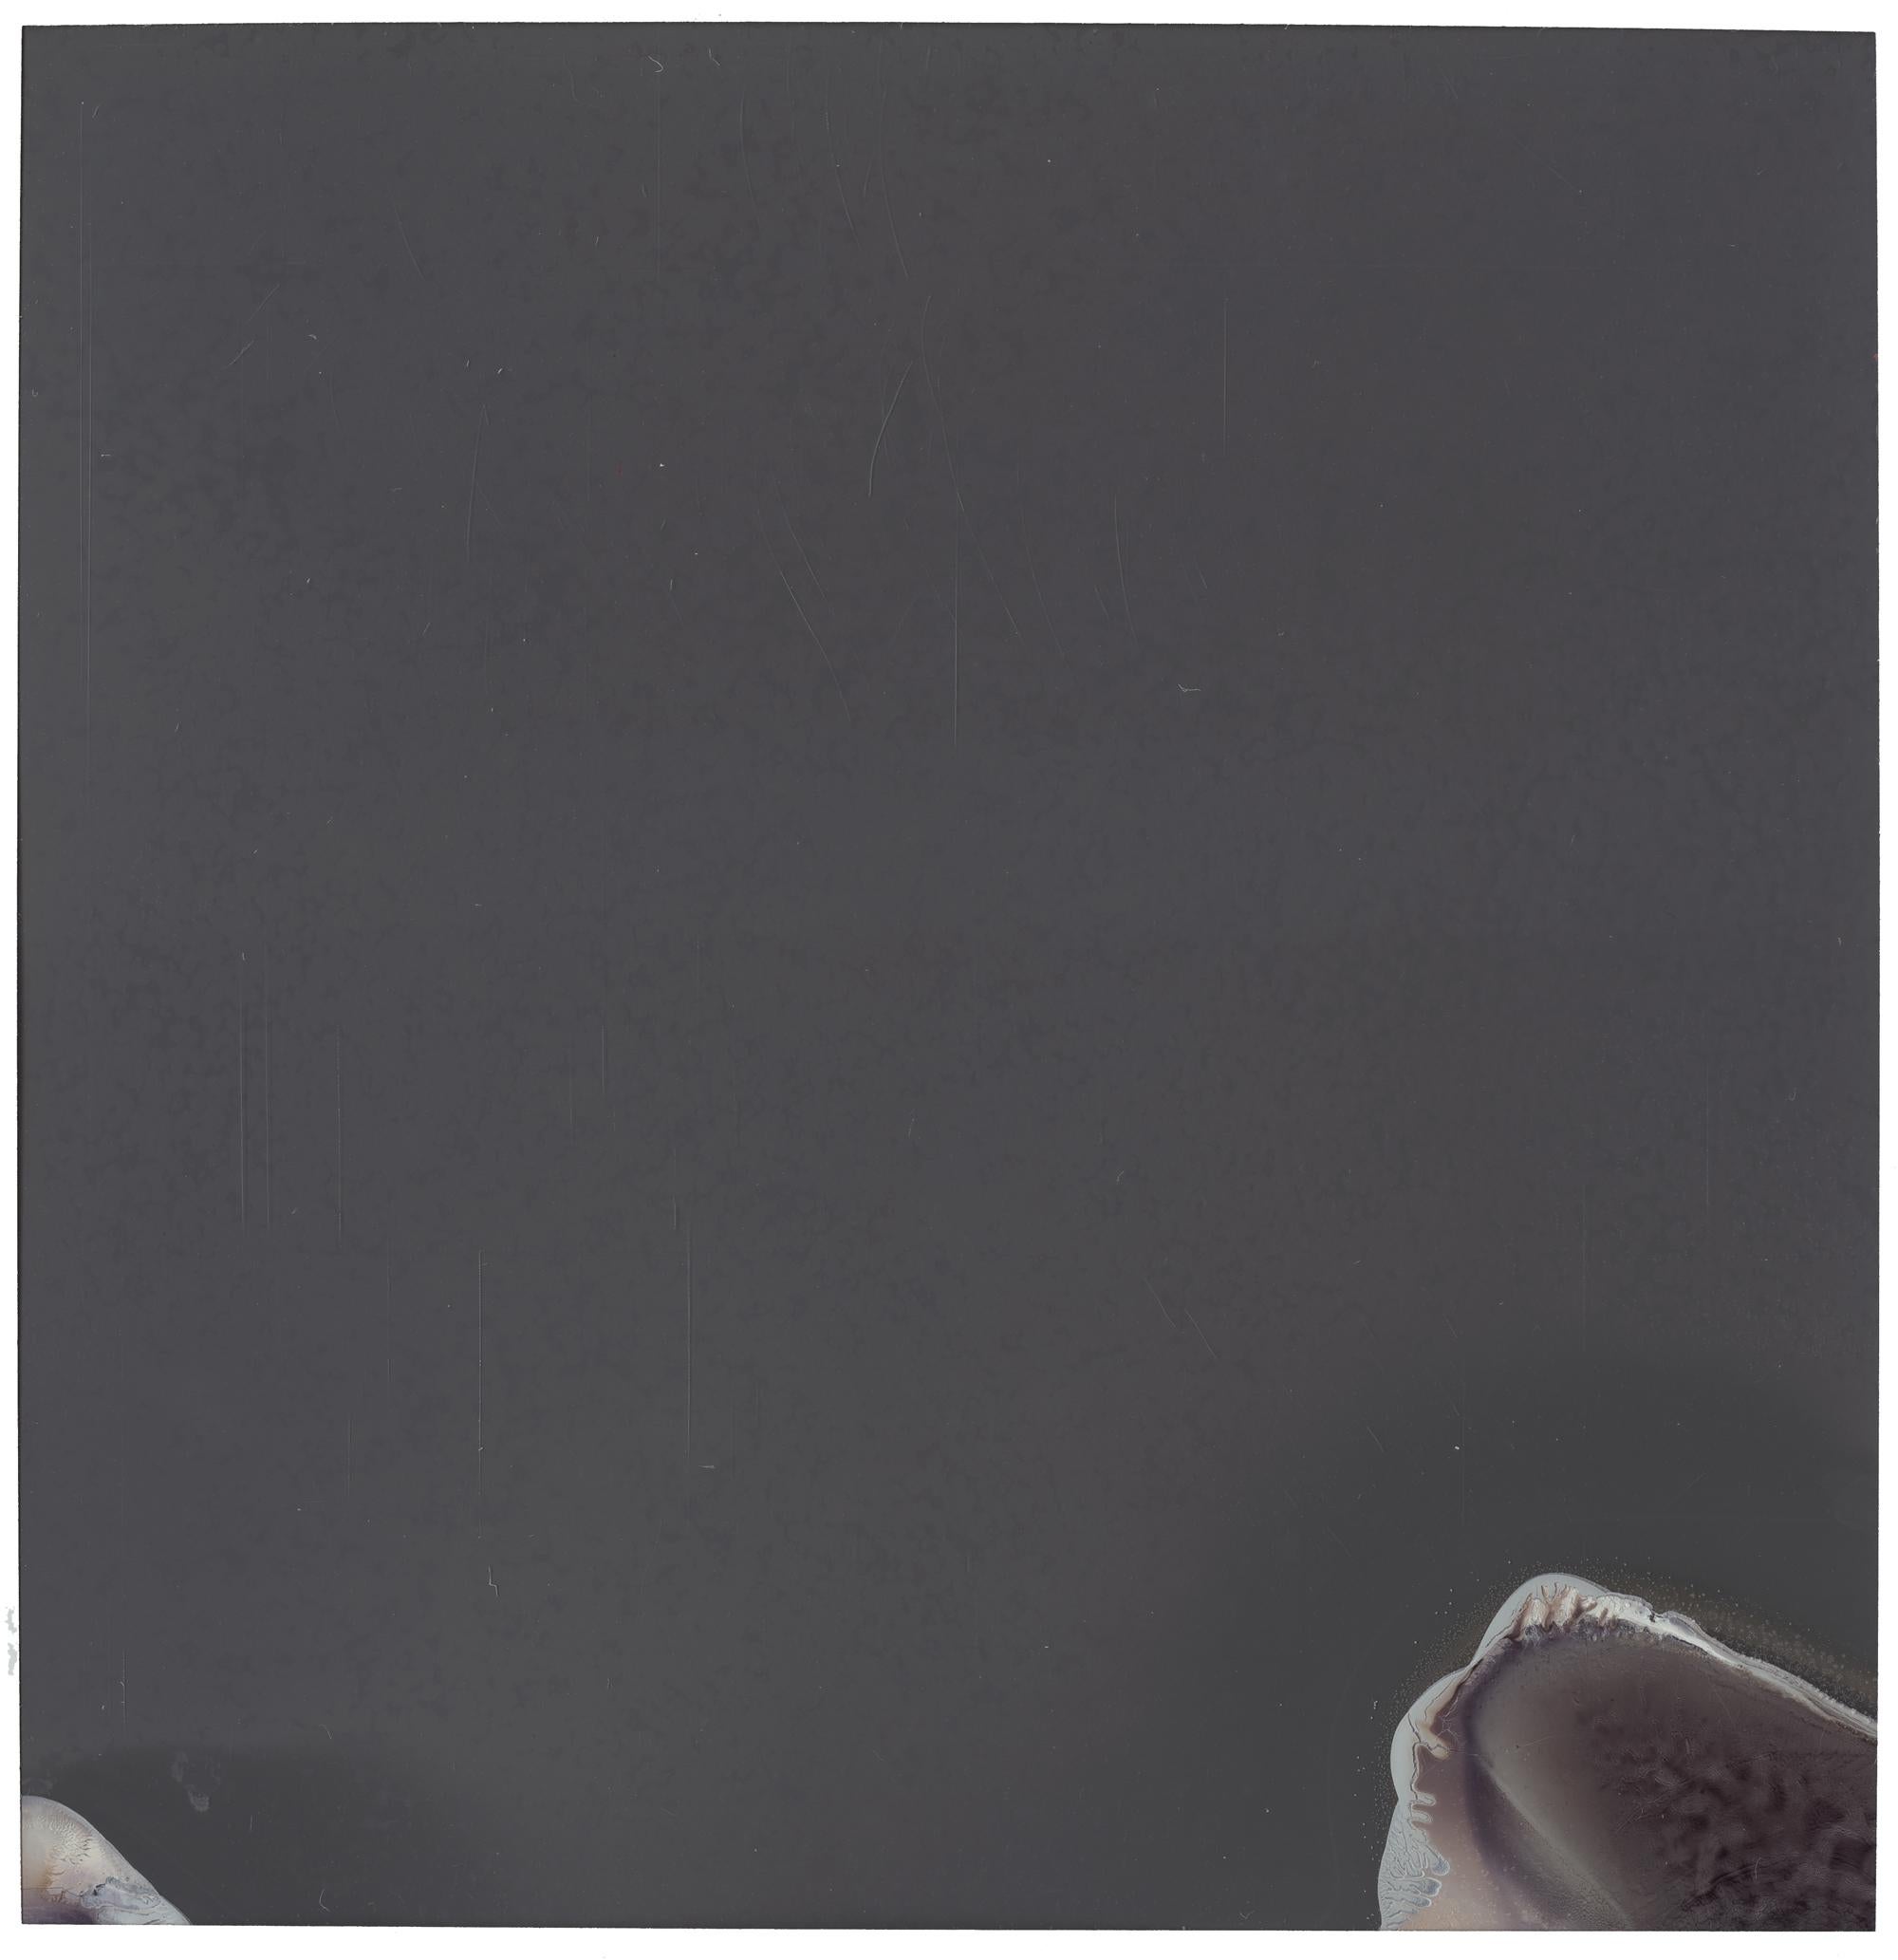 Stefanie Schneider Landscape Photograph - Eternity (Deconstructivism) - Contemporary, Expired Polaroid